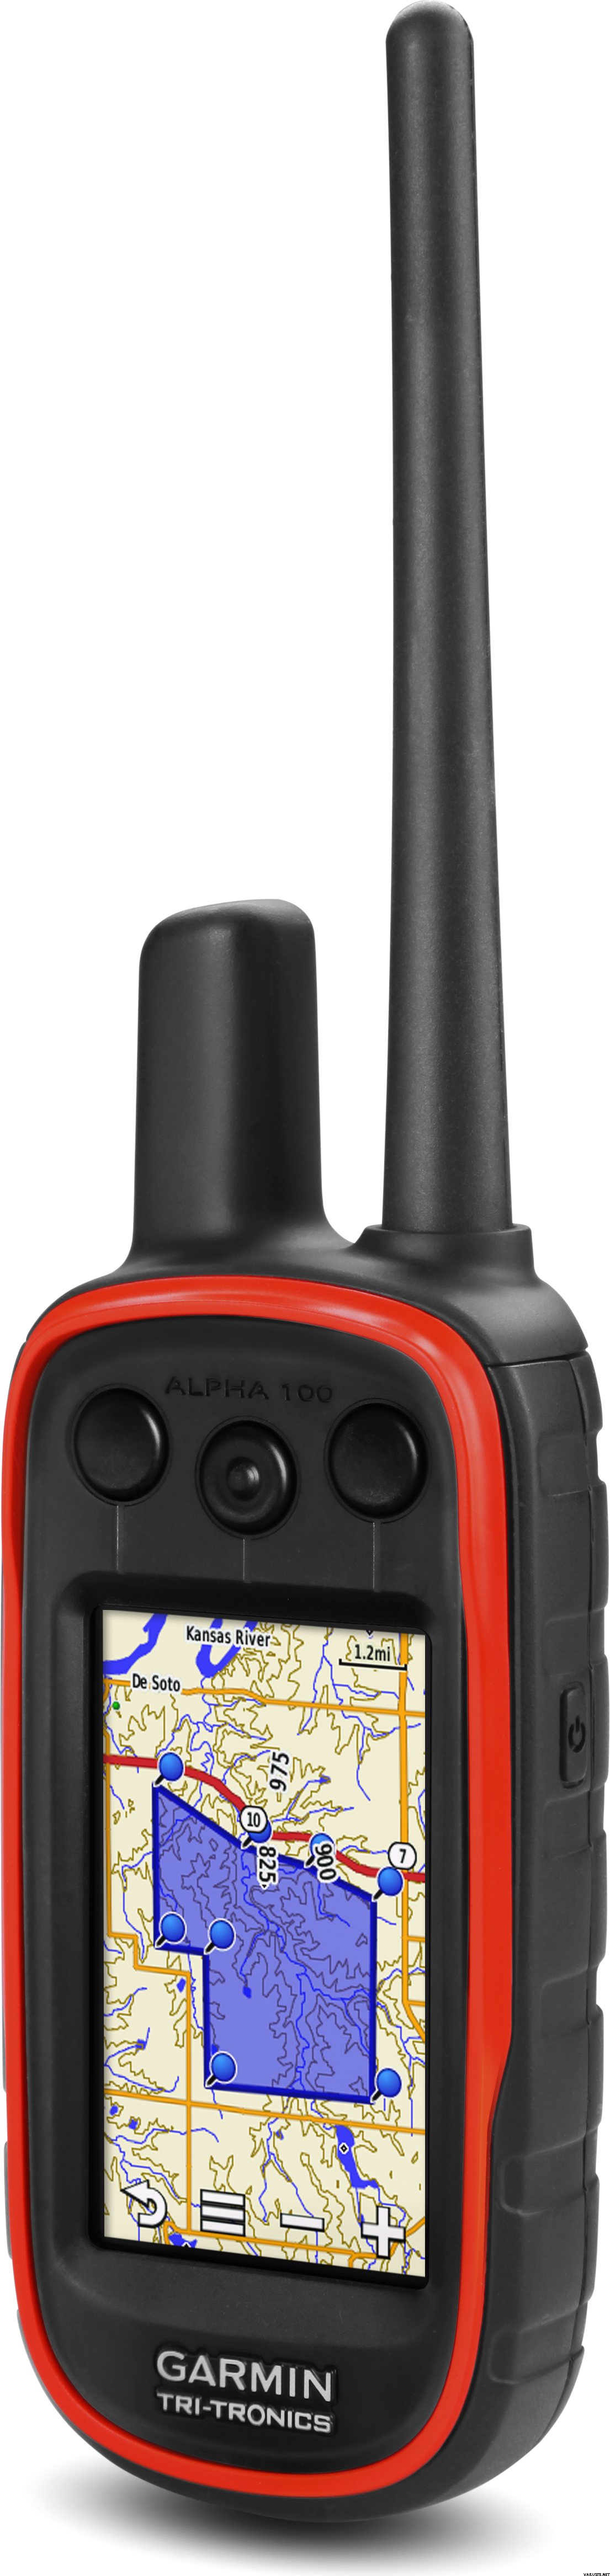 Garmin Alpha 100 Handheld Only | GPS Dog Tracking Devices | Varuste.net